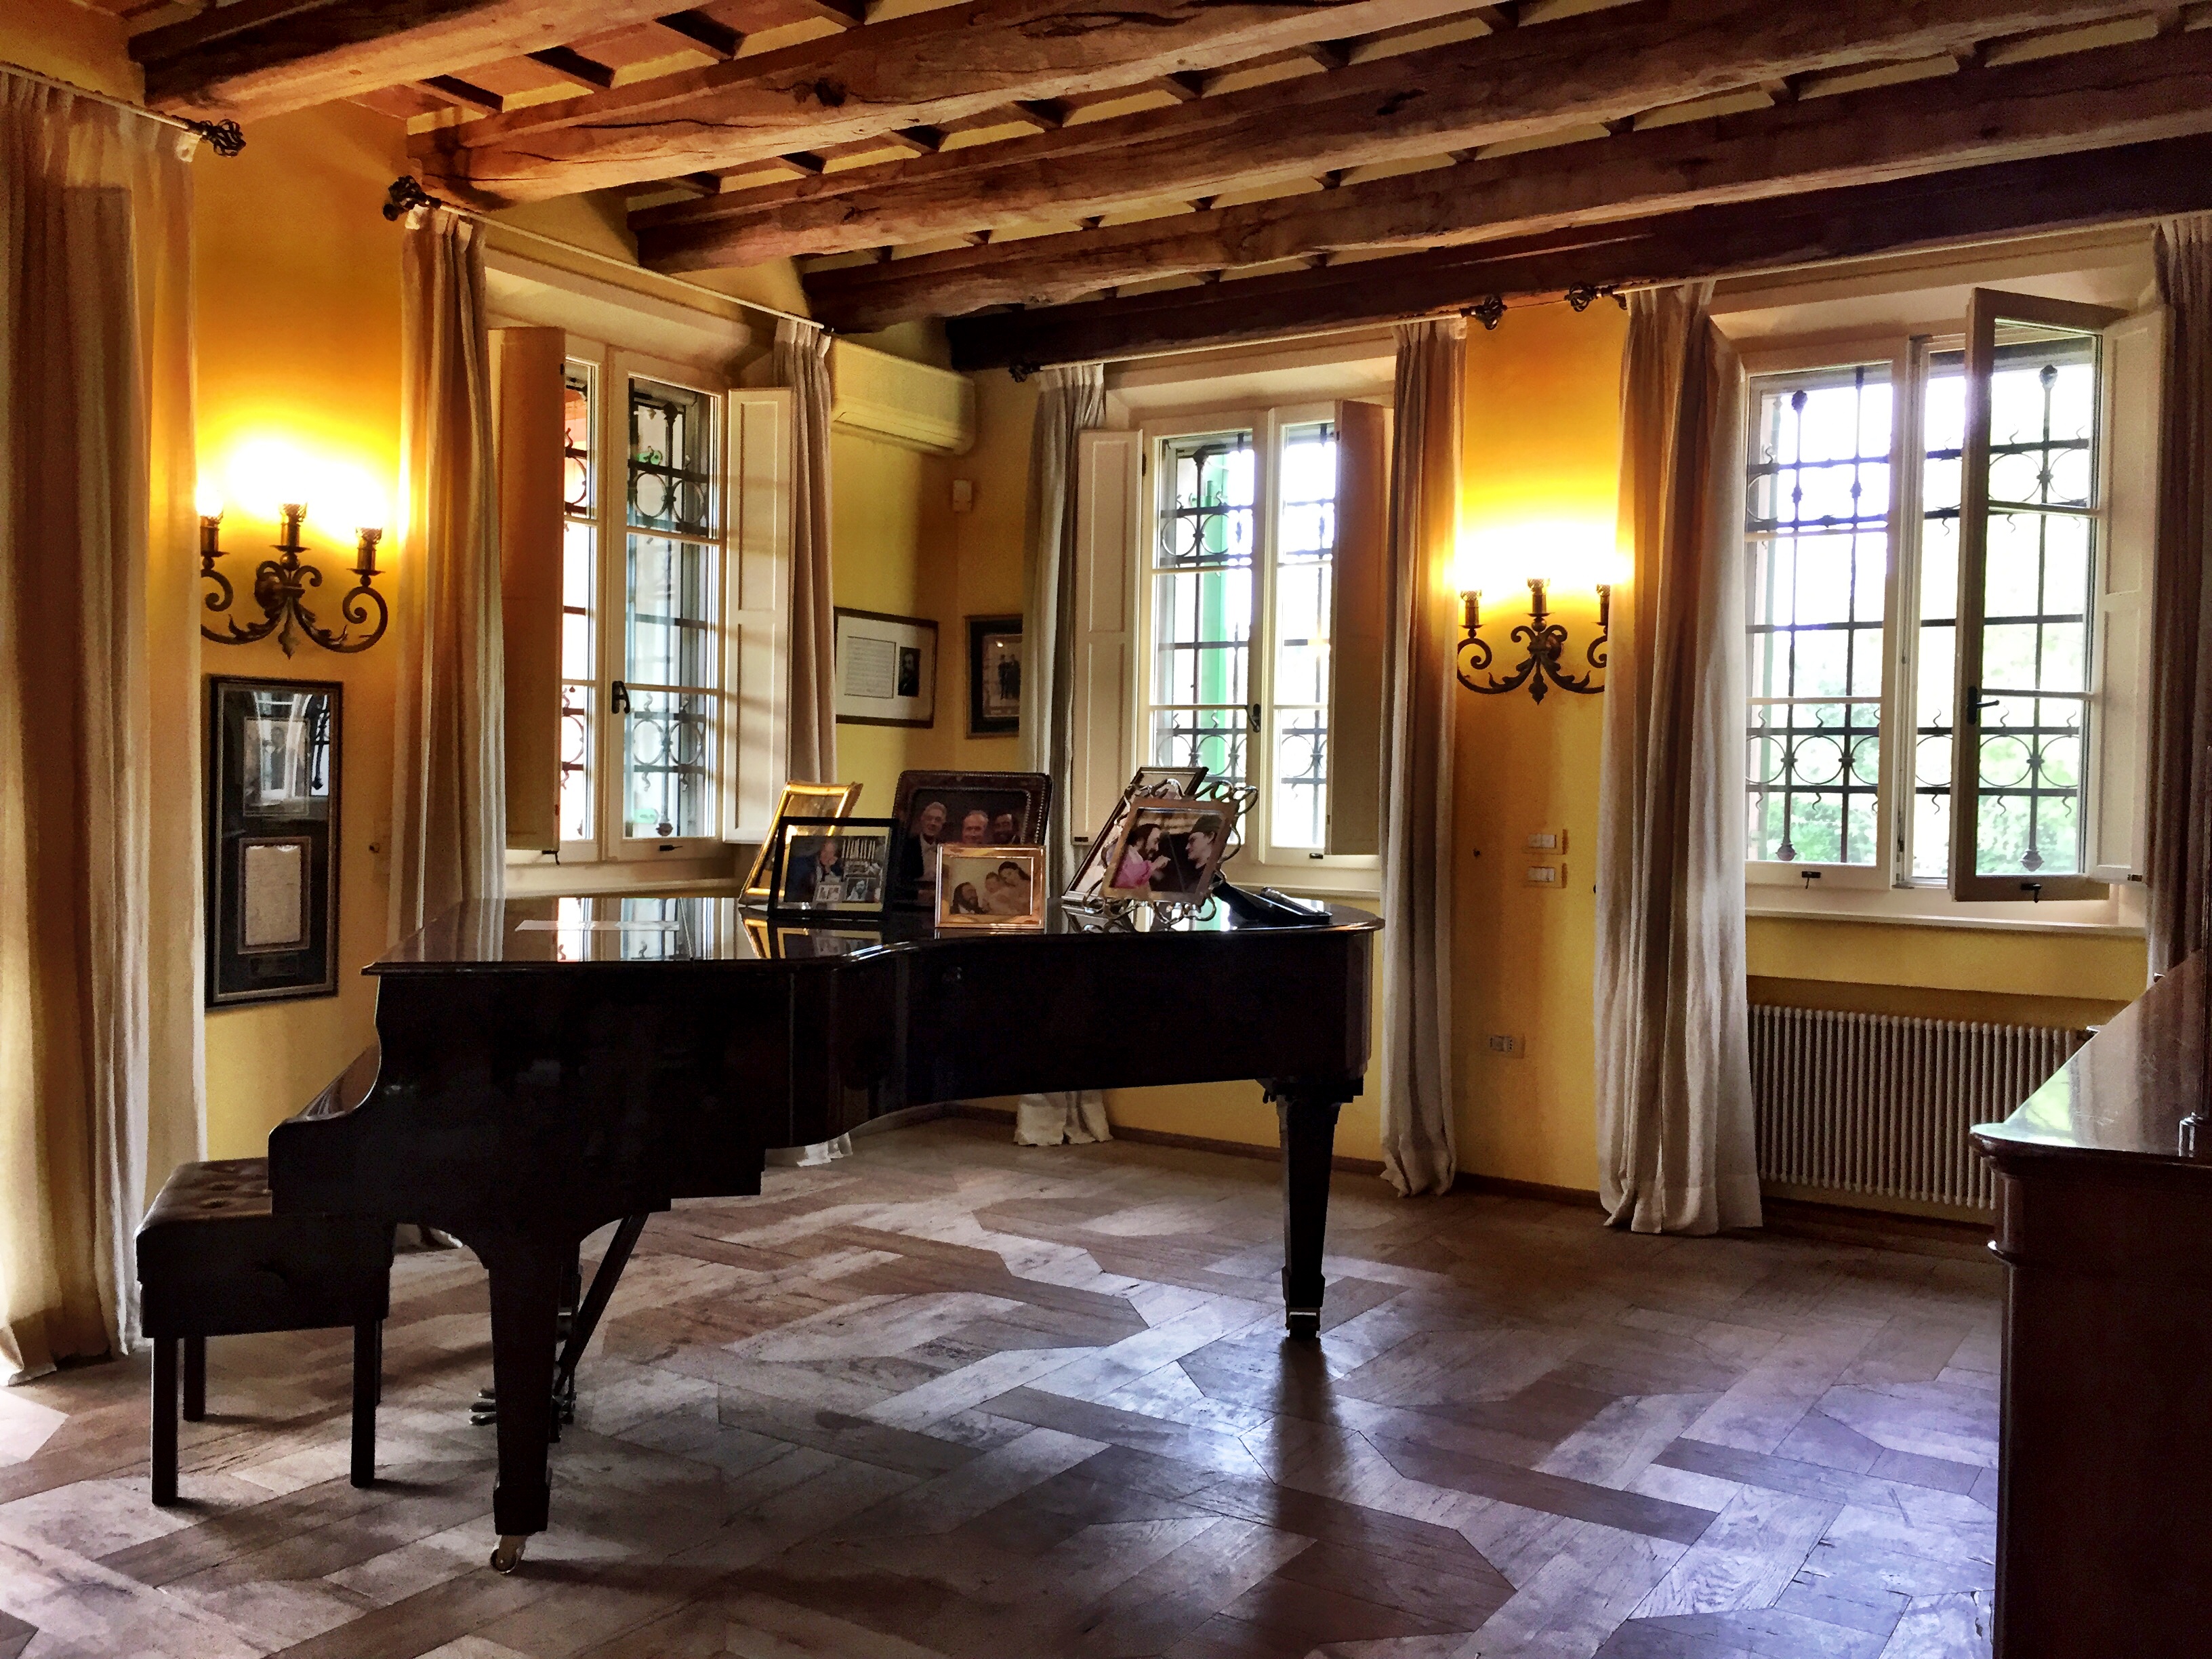 Pavarotti's house - Modena - Italia